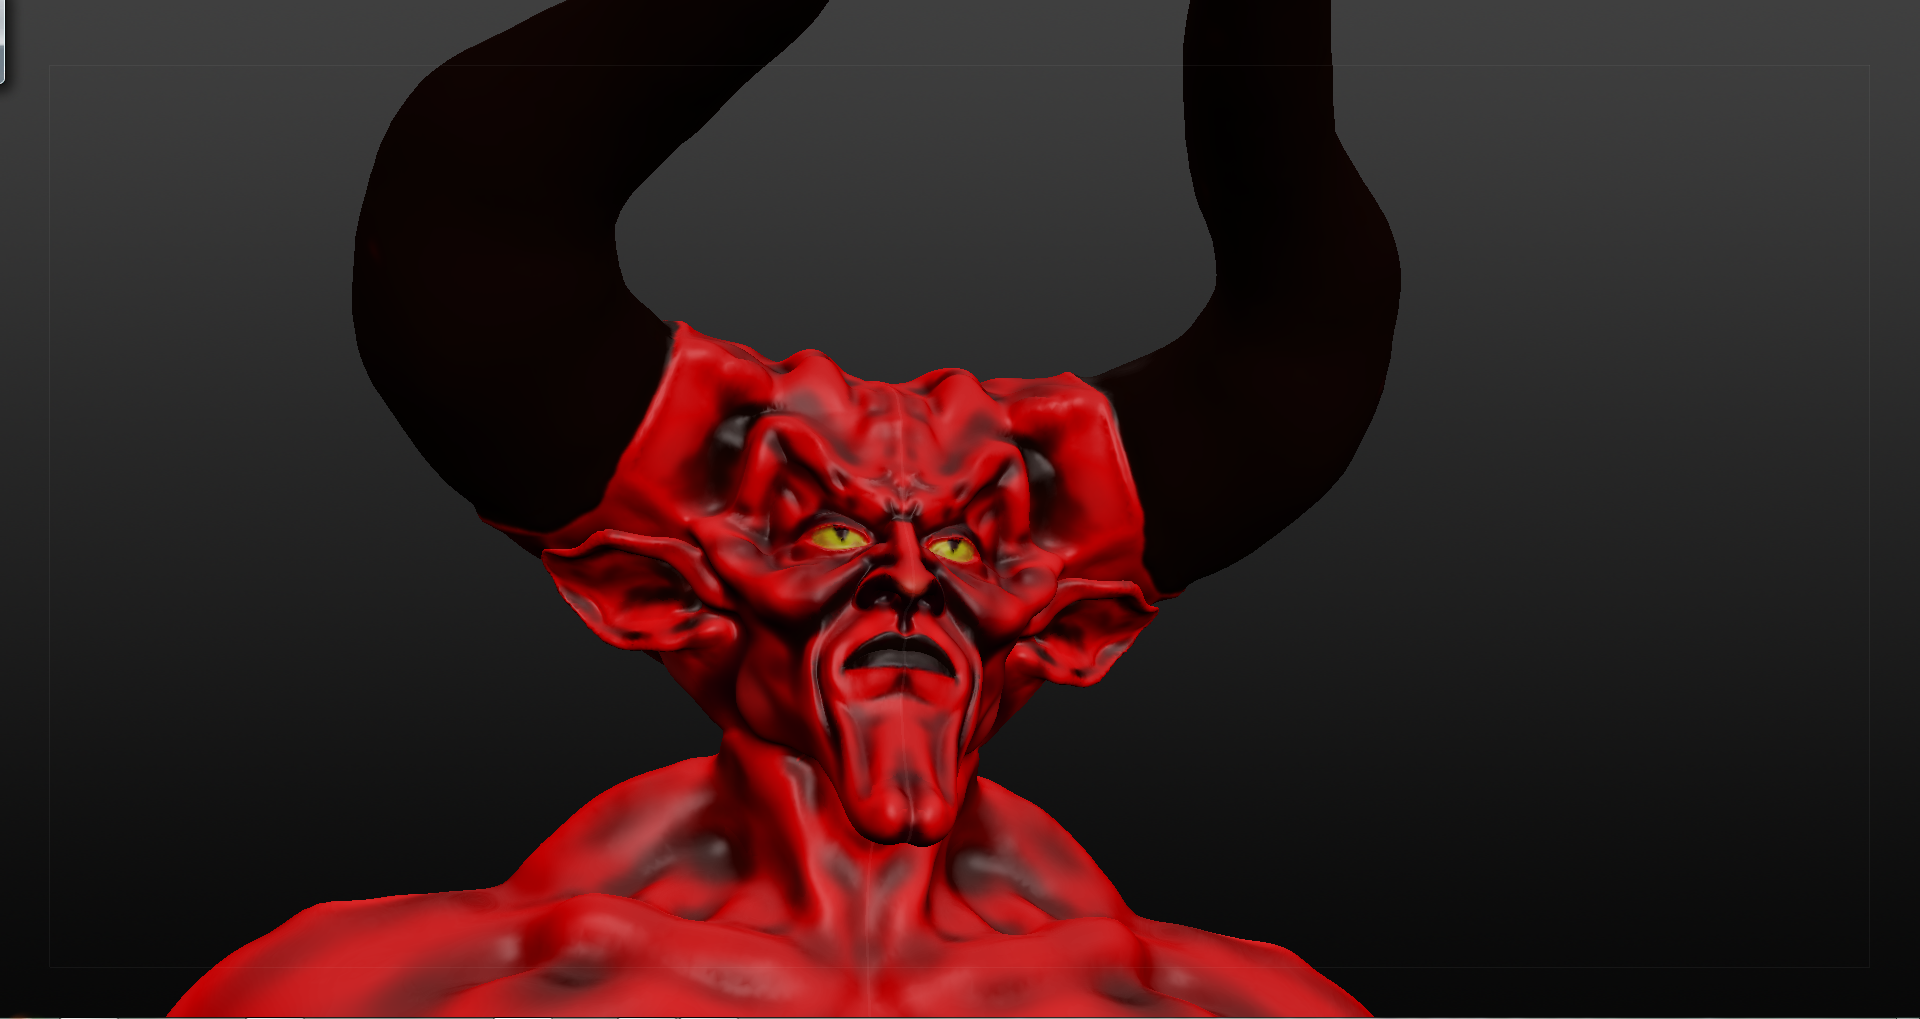 The anglosaxon concept of “Sympathy for the Devil” | Studio Tekne